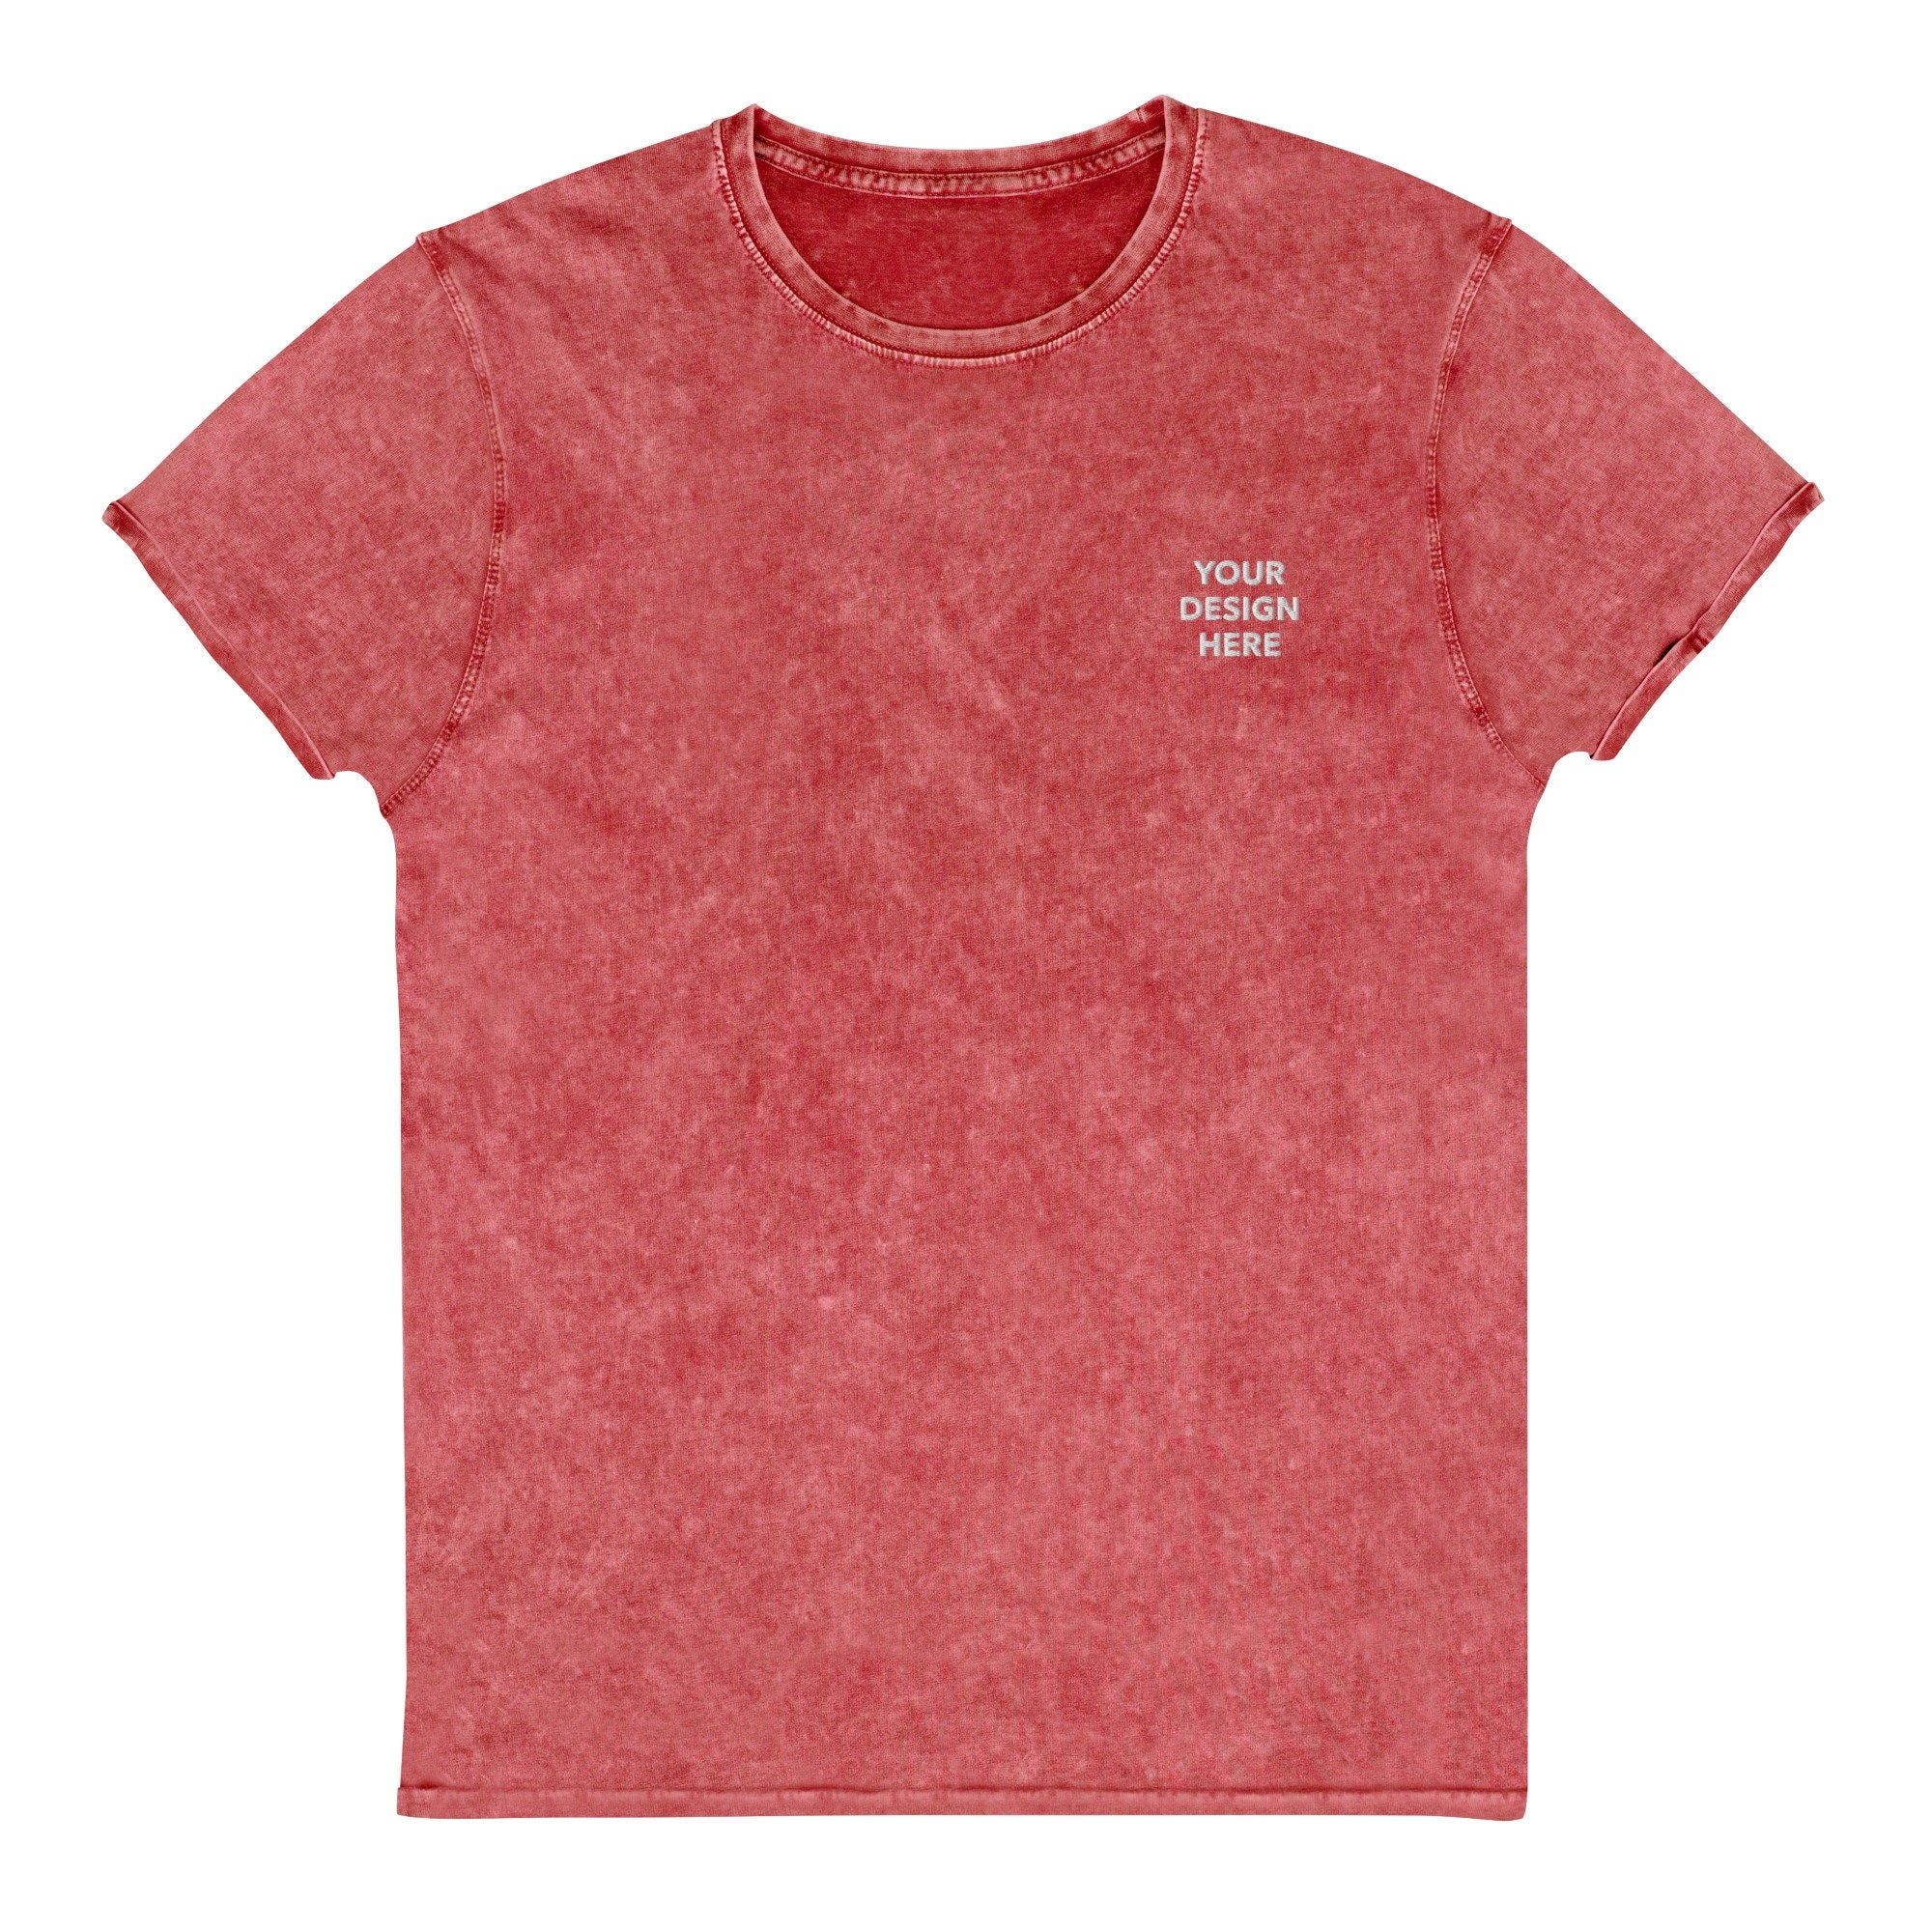 Personalized Embroidered Denim T-Shirt, Customized Logo Denim T-Shirt, Embroidery With Your Own Text or Design, Handmade Denim Tee